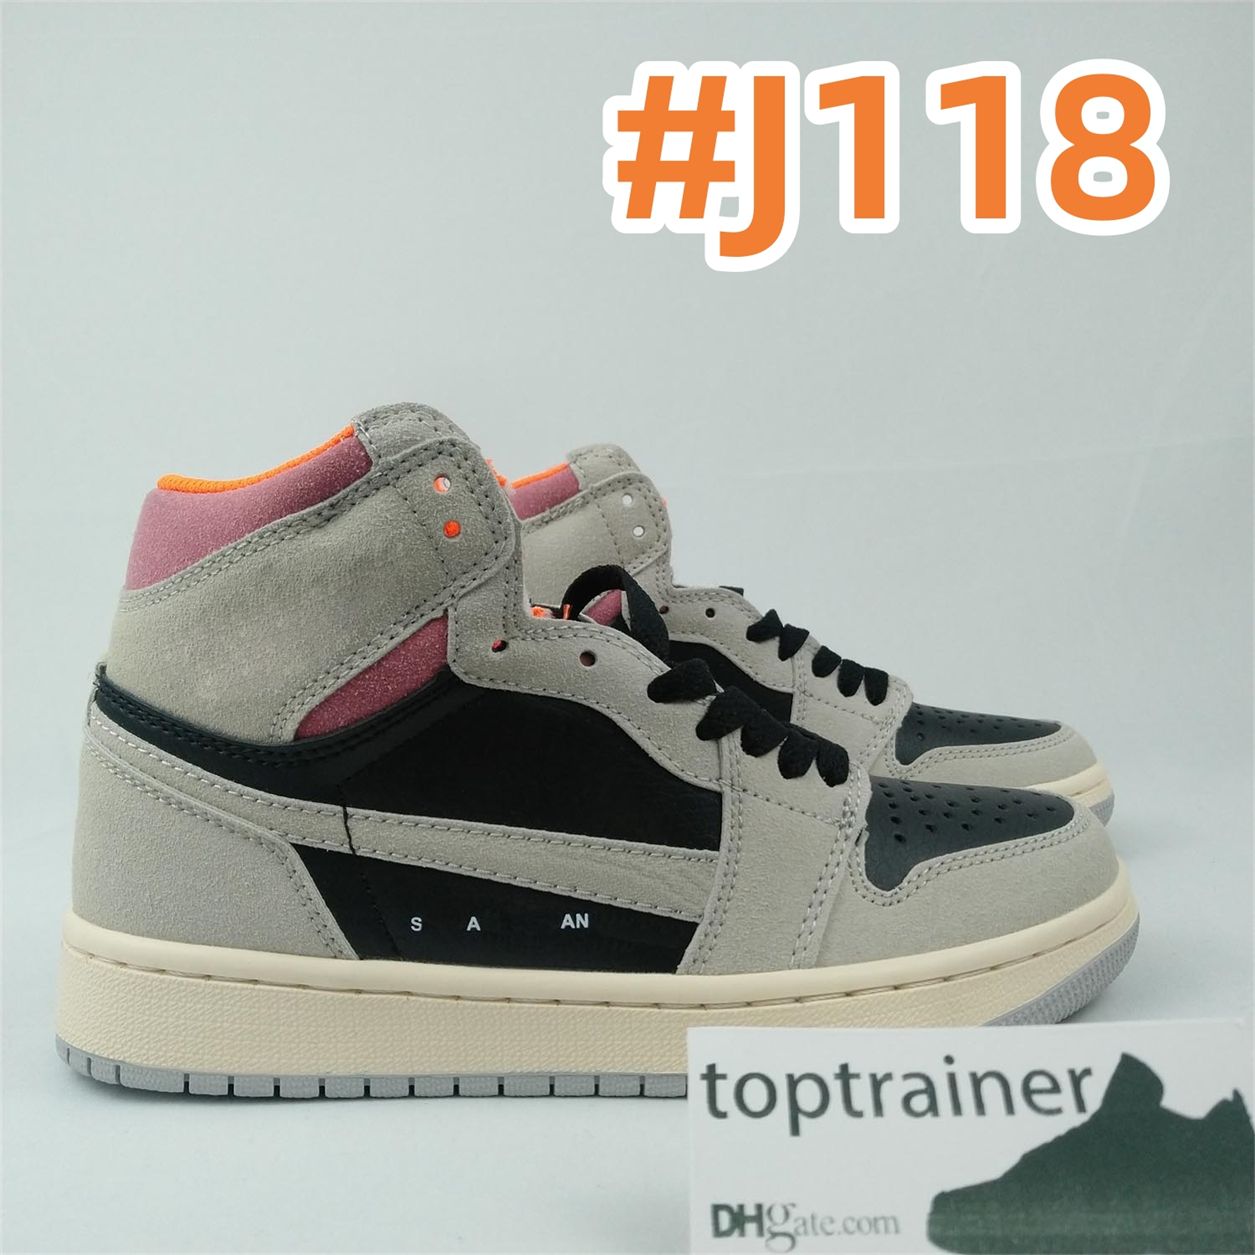 #J118